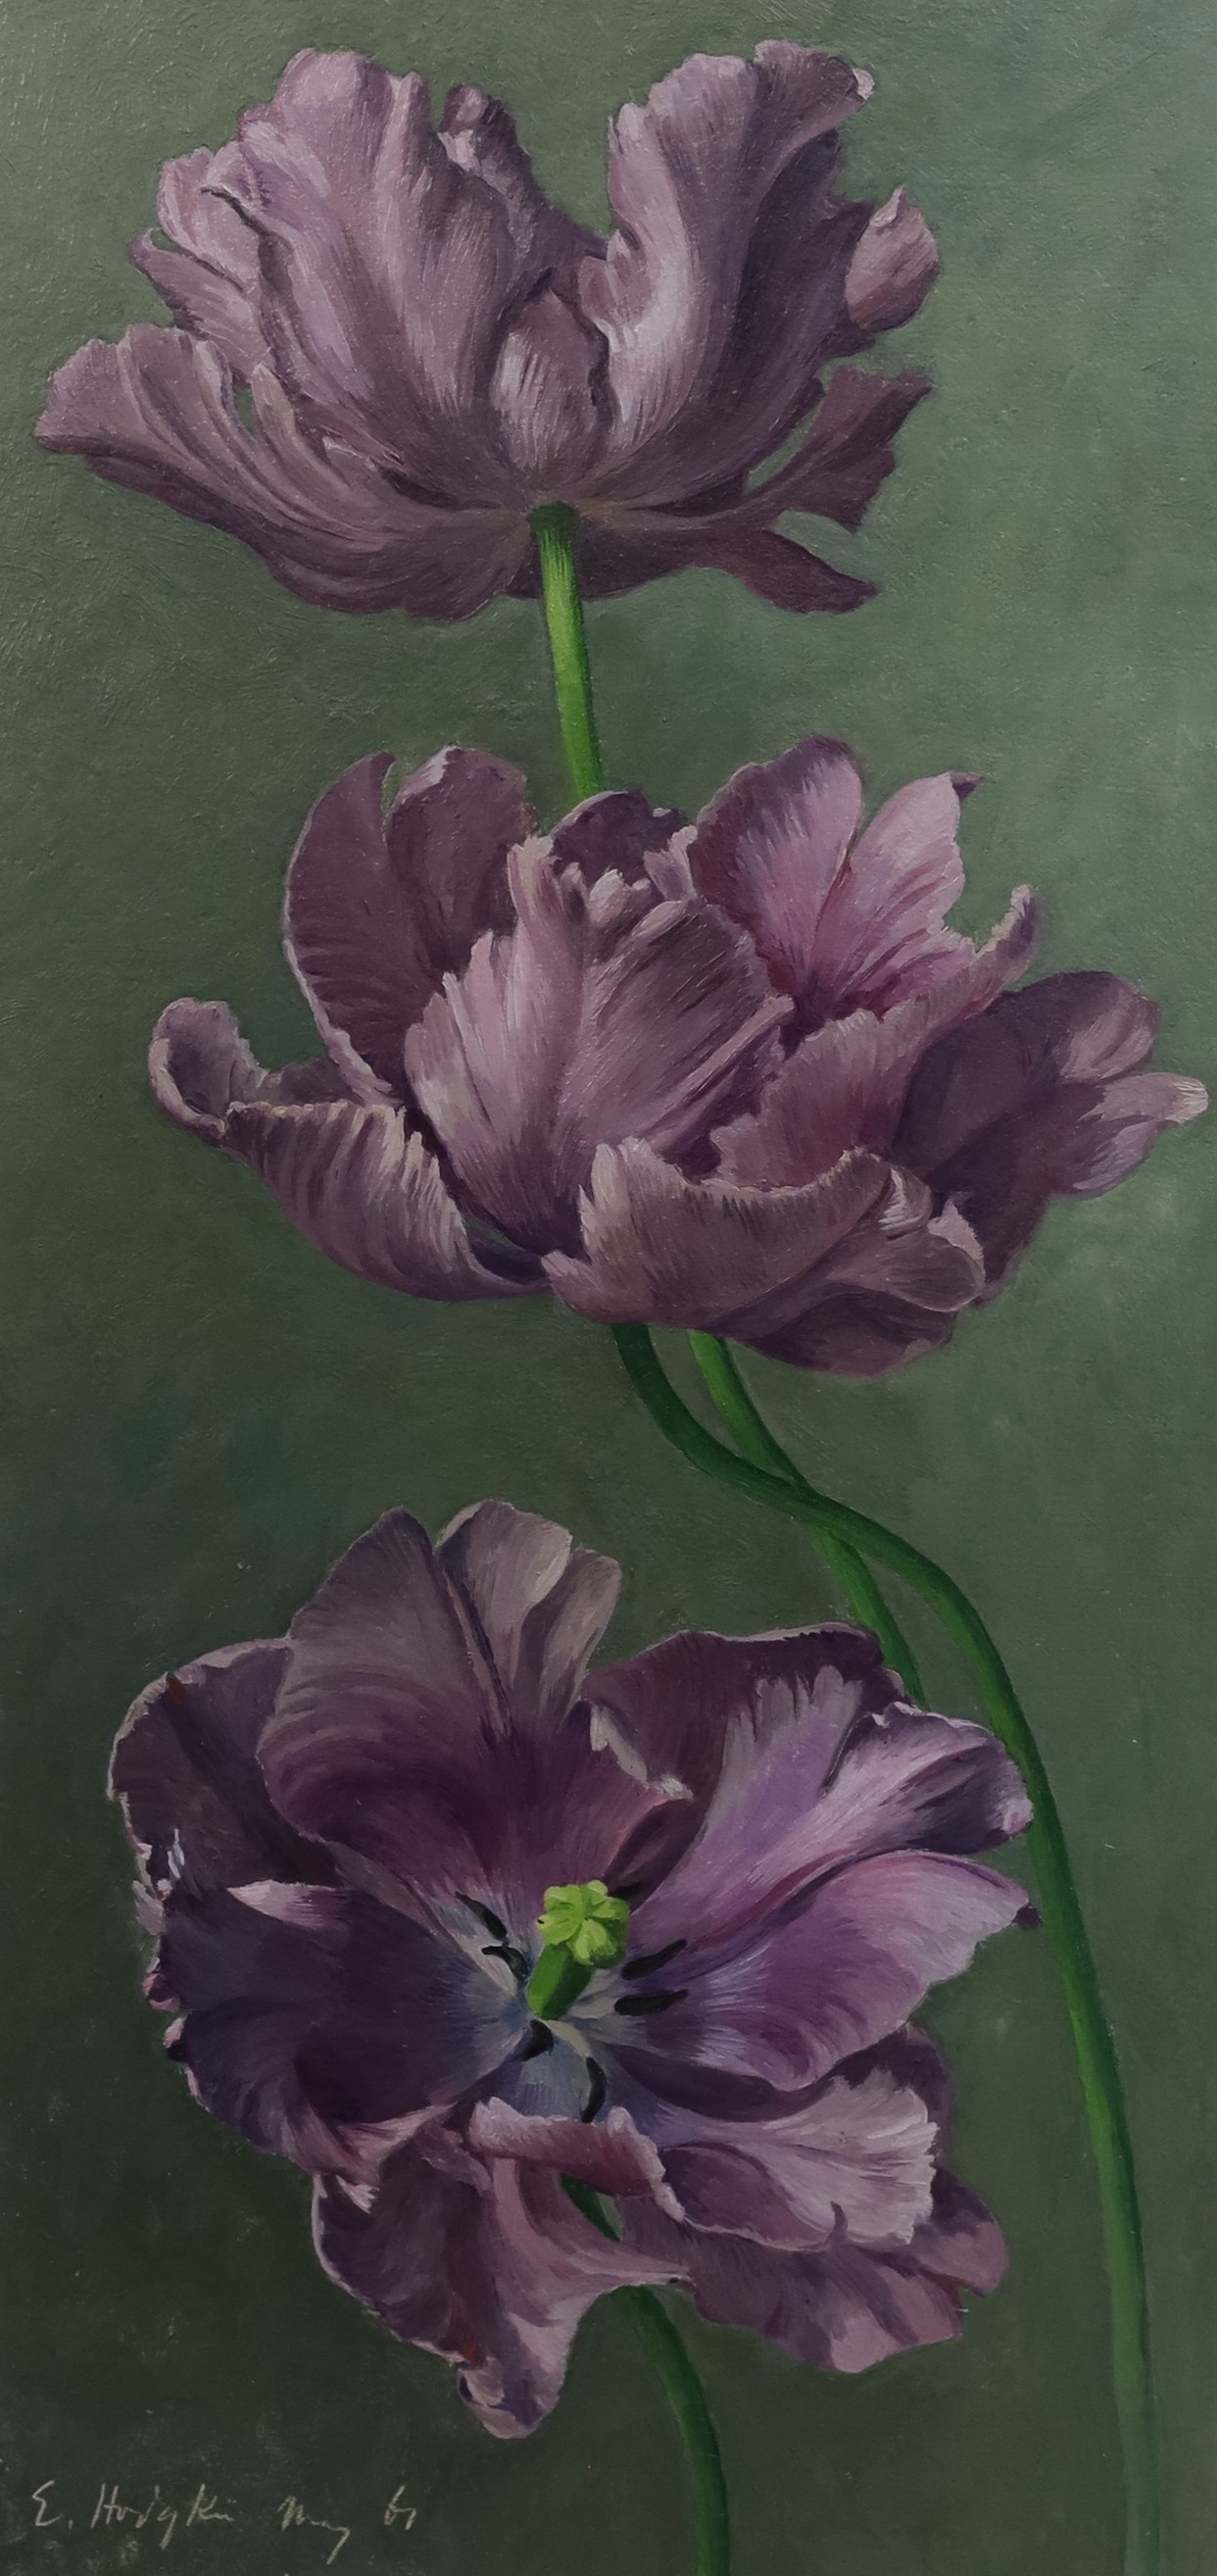 Eliot Hodgkin (British, 1905-1987), 'Tulips', oil on board, 43 x 21 cm